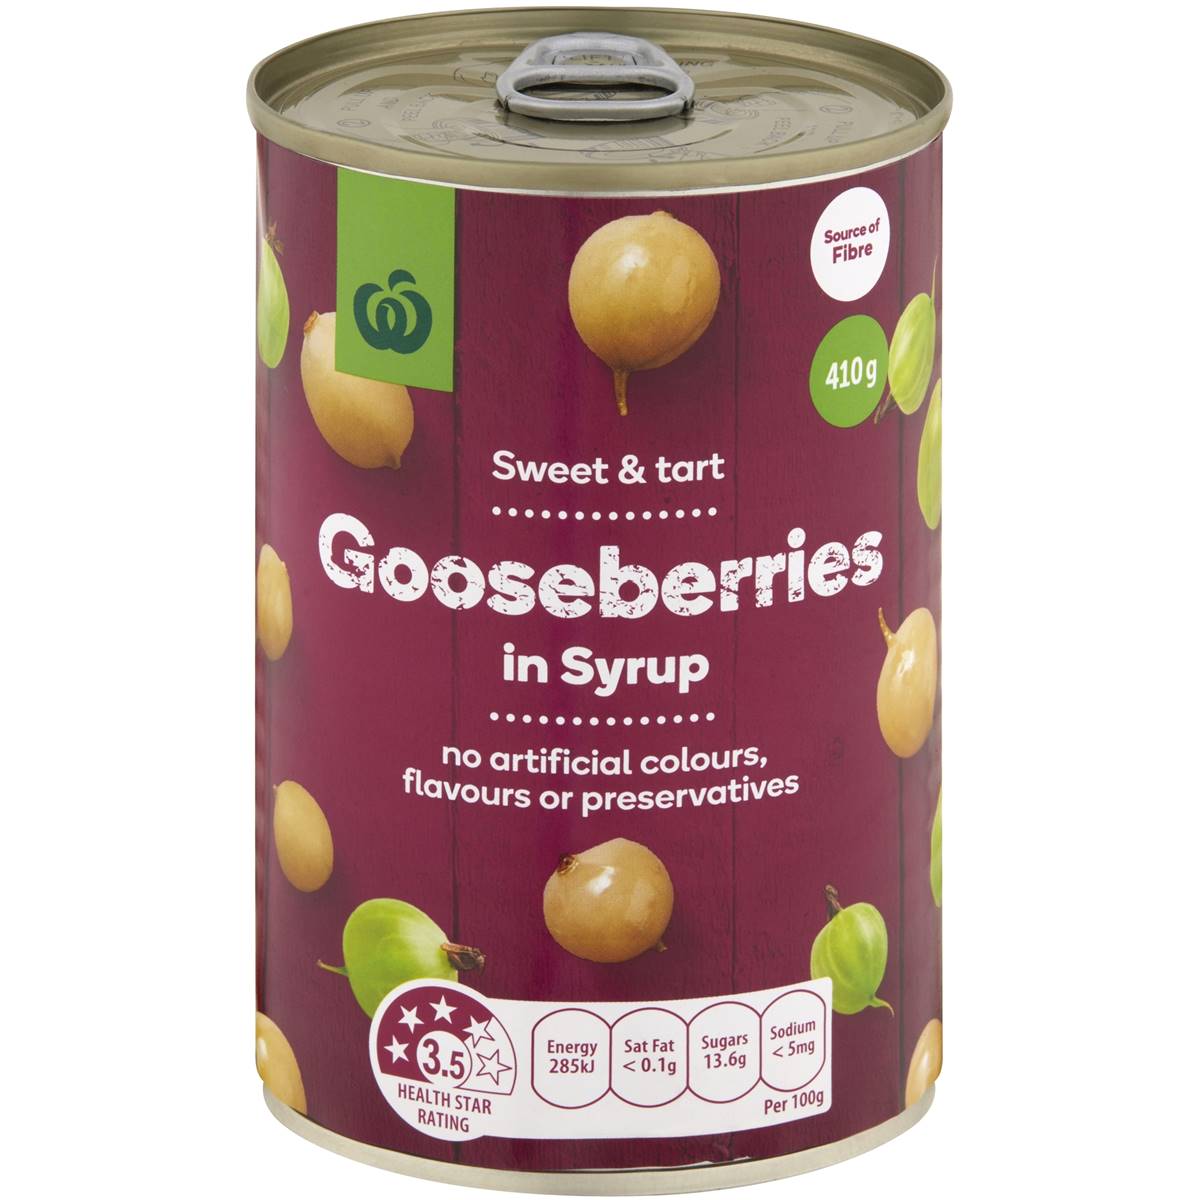 Calories in Woolworths Gooseberries In Syrup